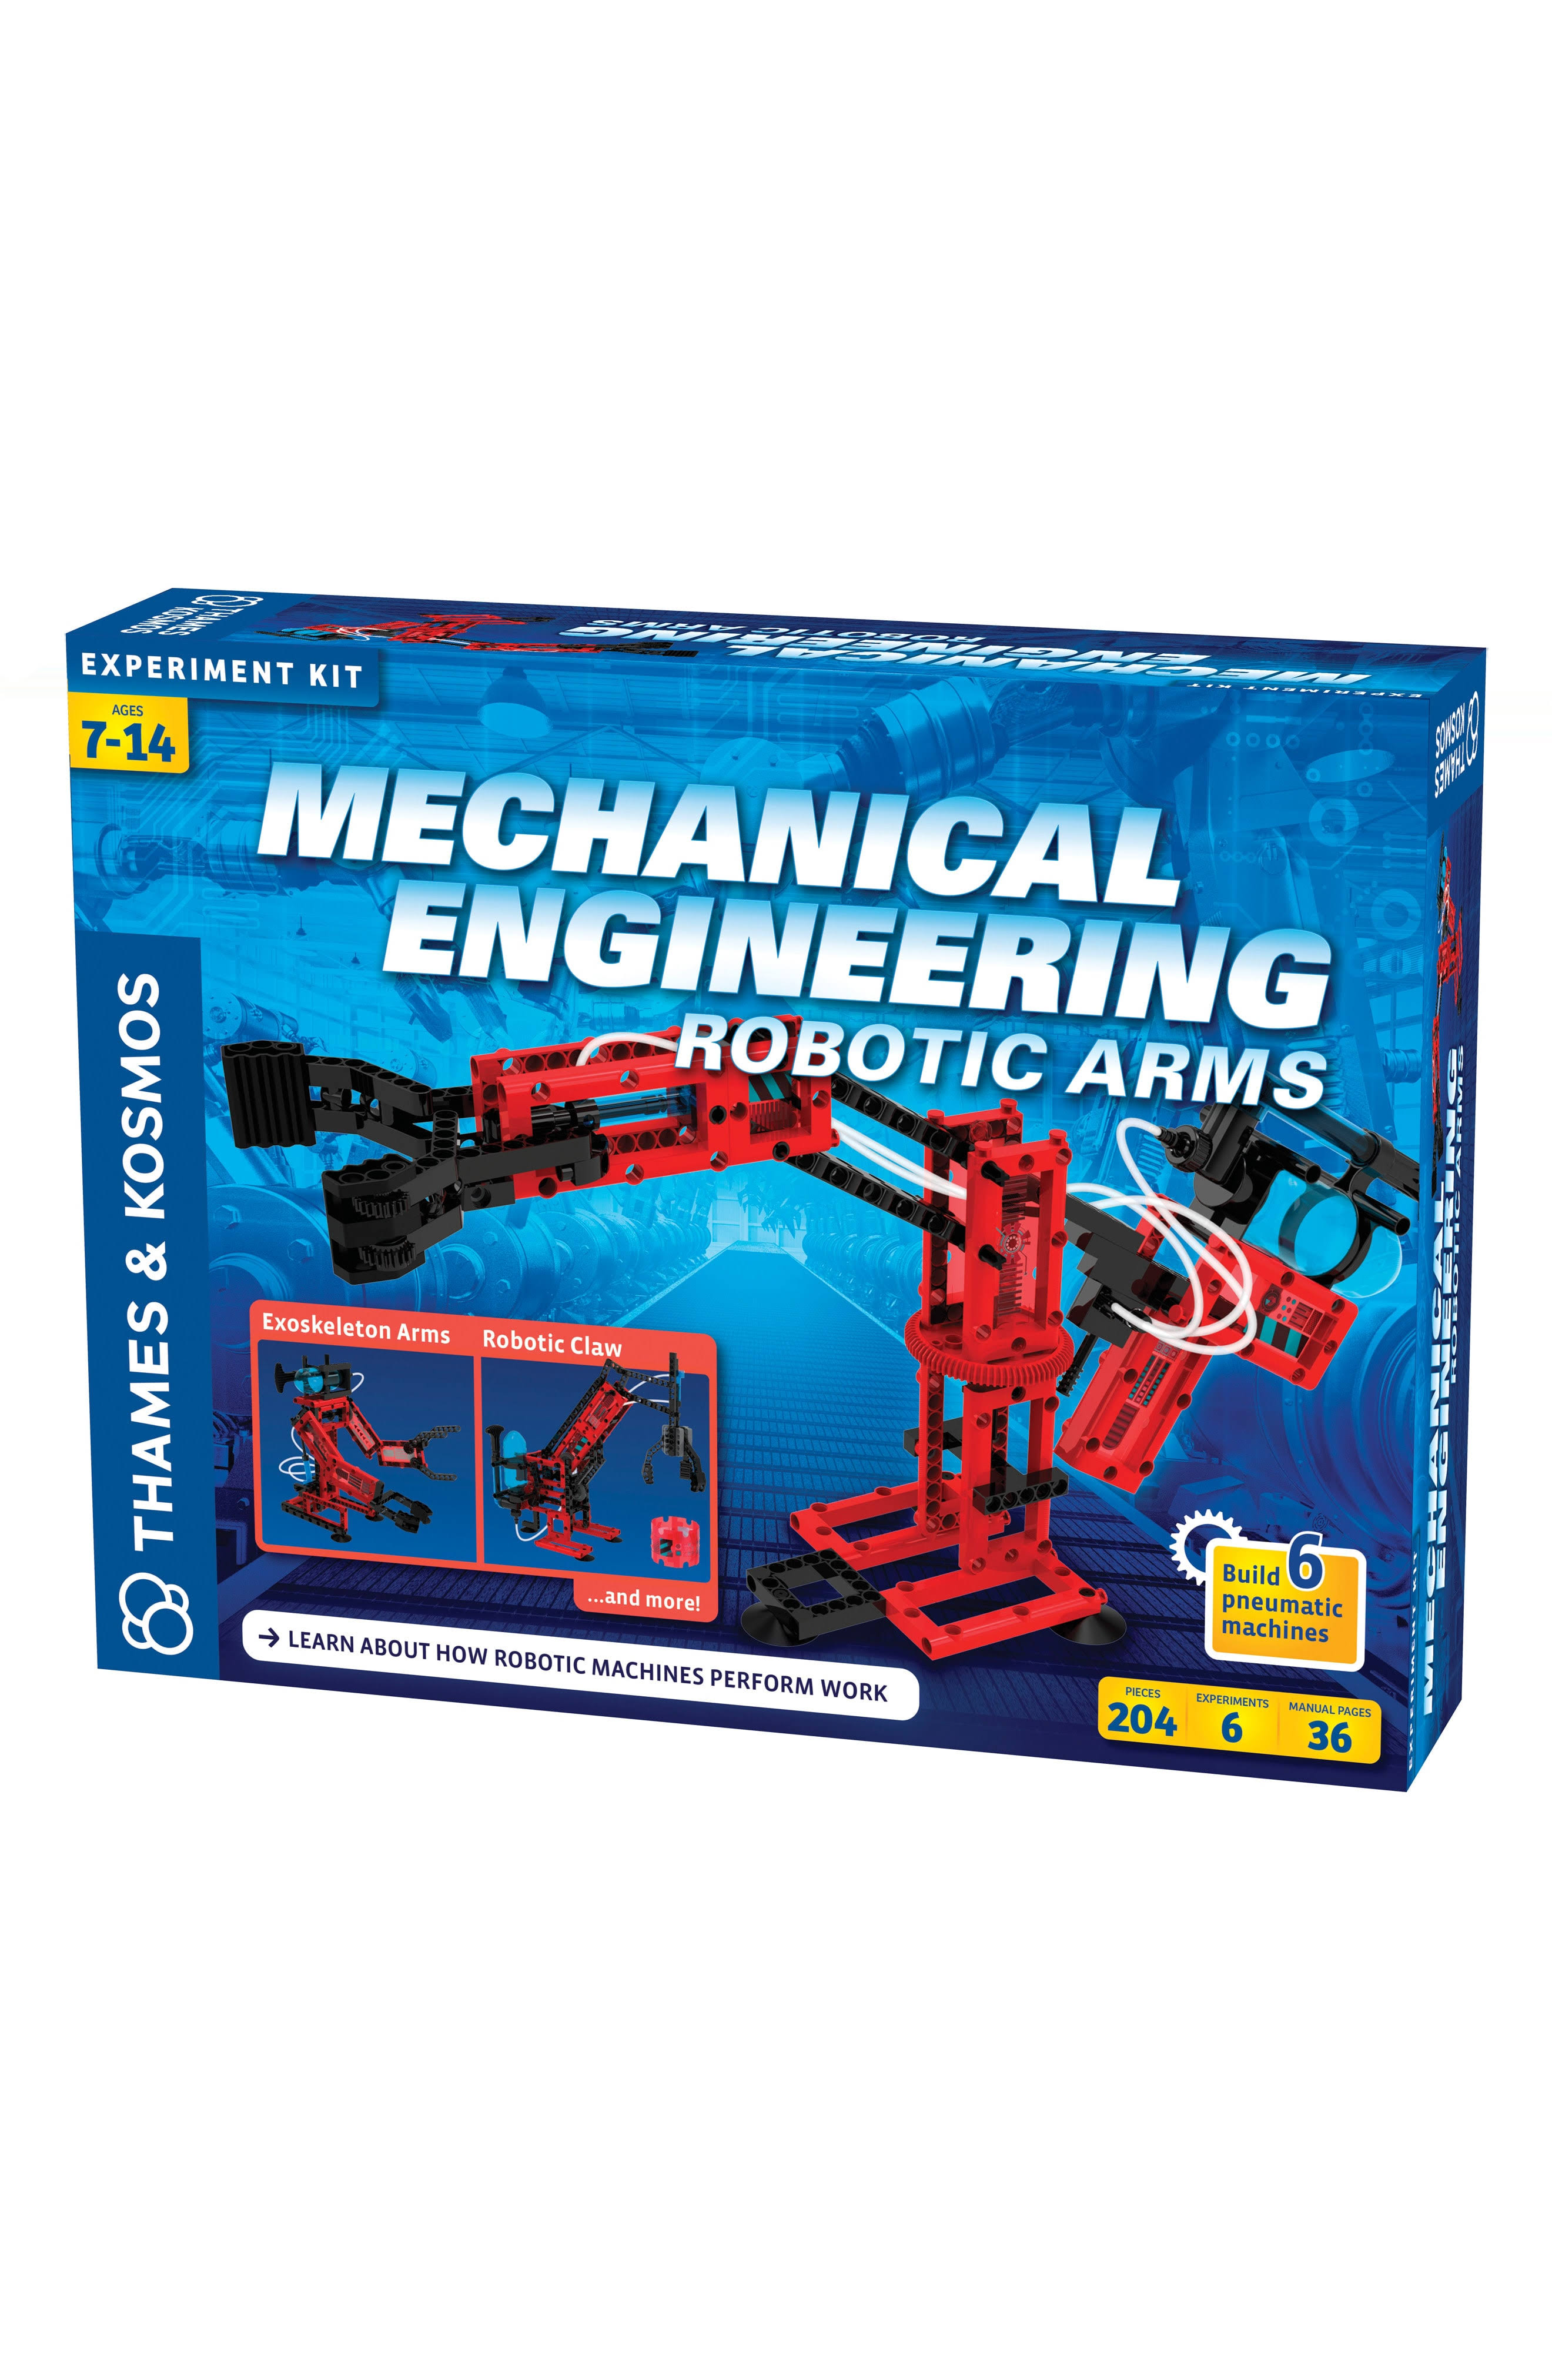 Thames & Kosmos Mechanical Engineering: Robotic Arms Science Kit